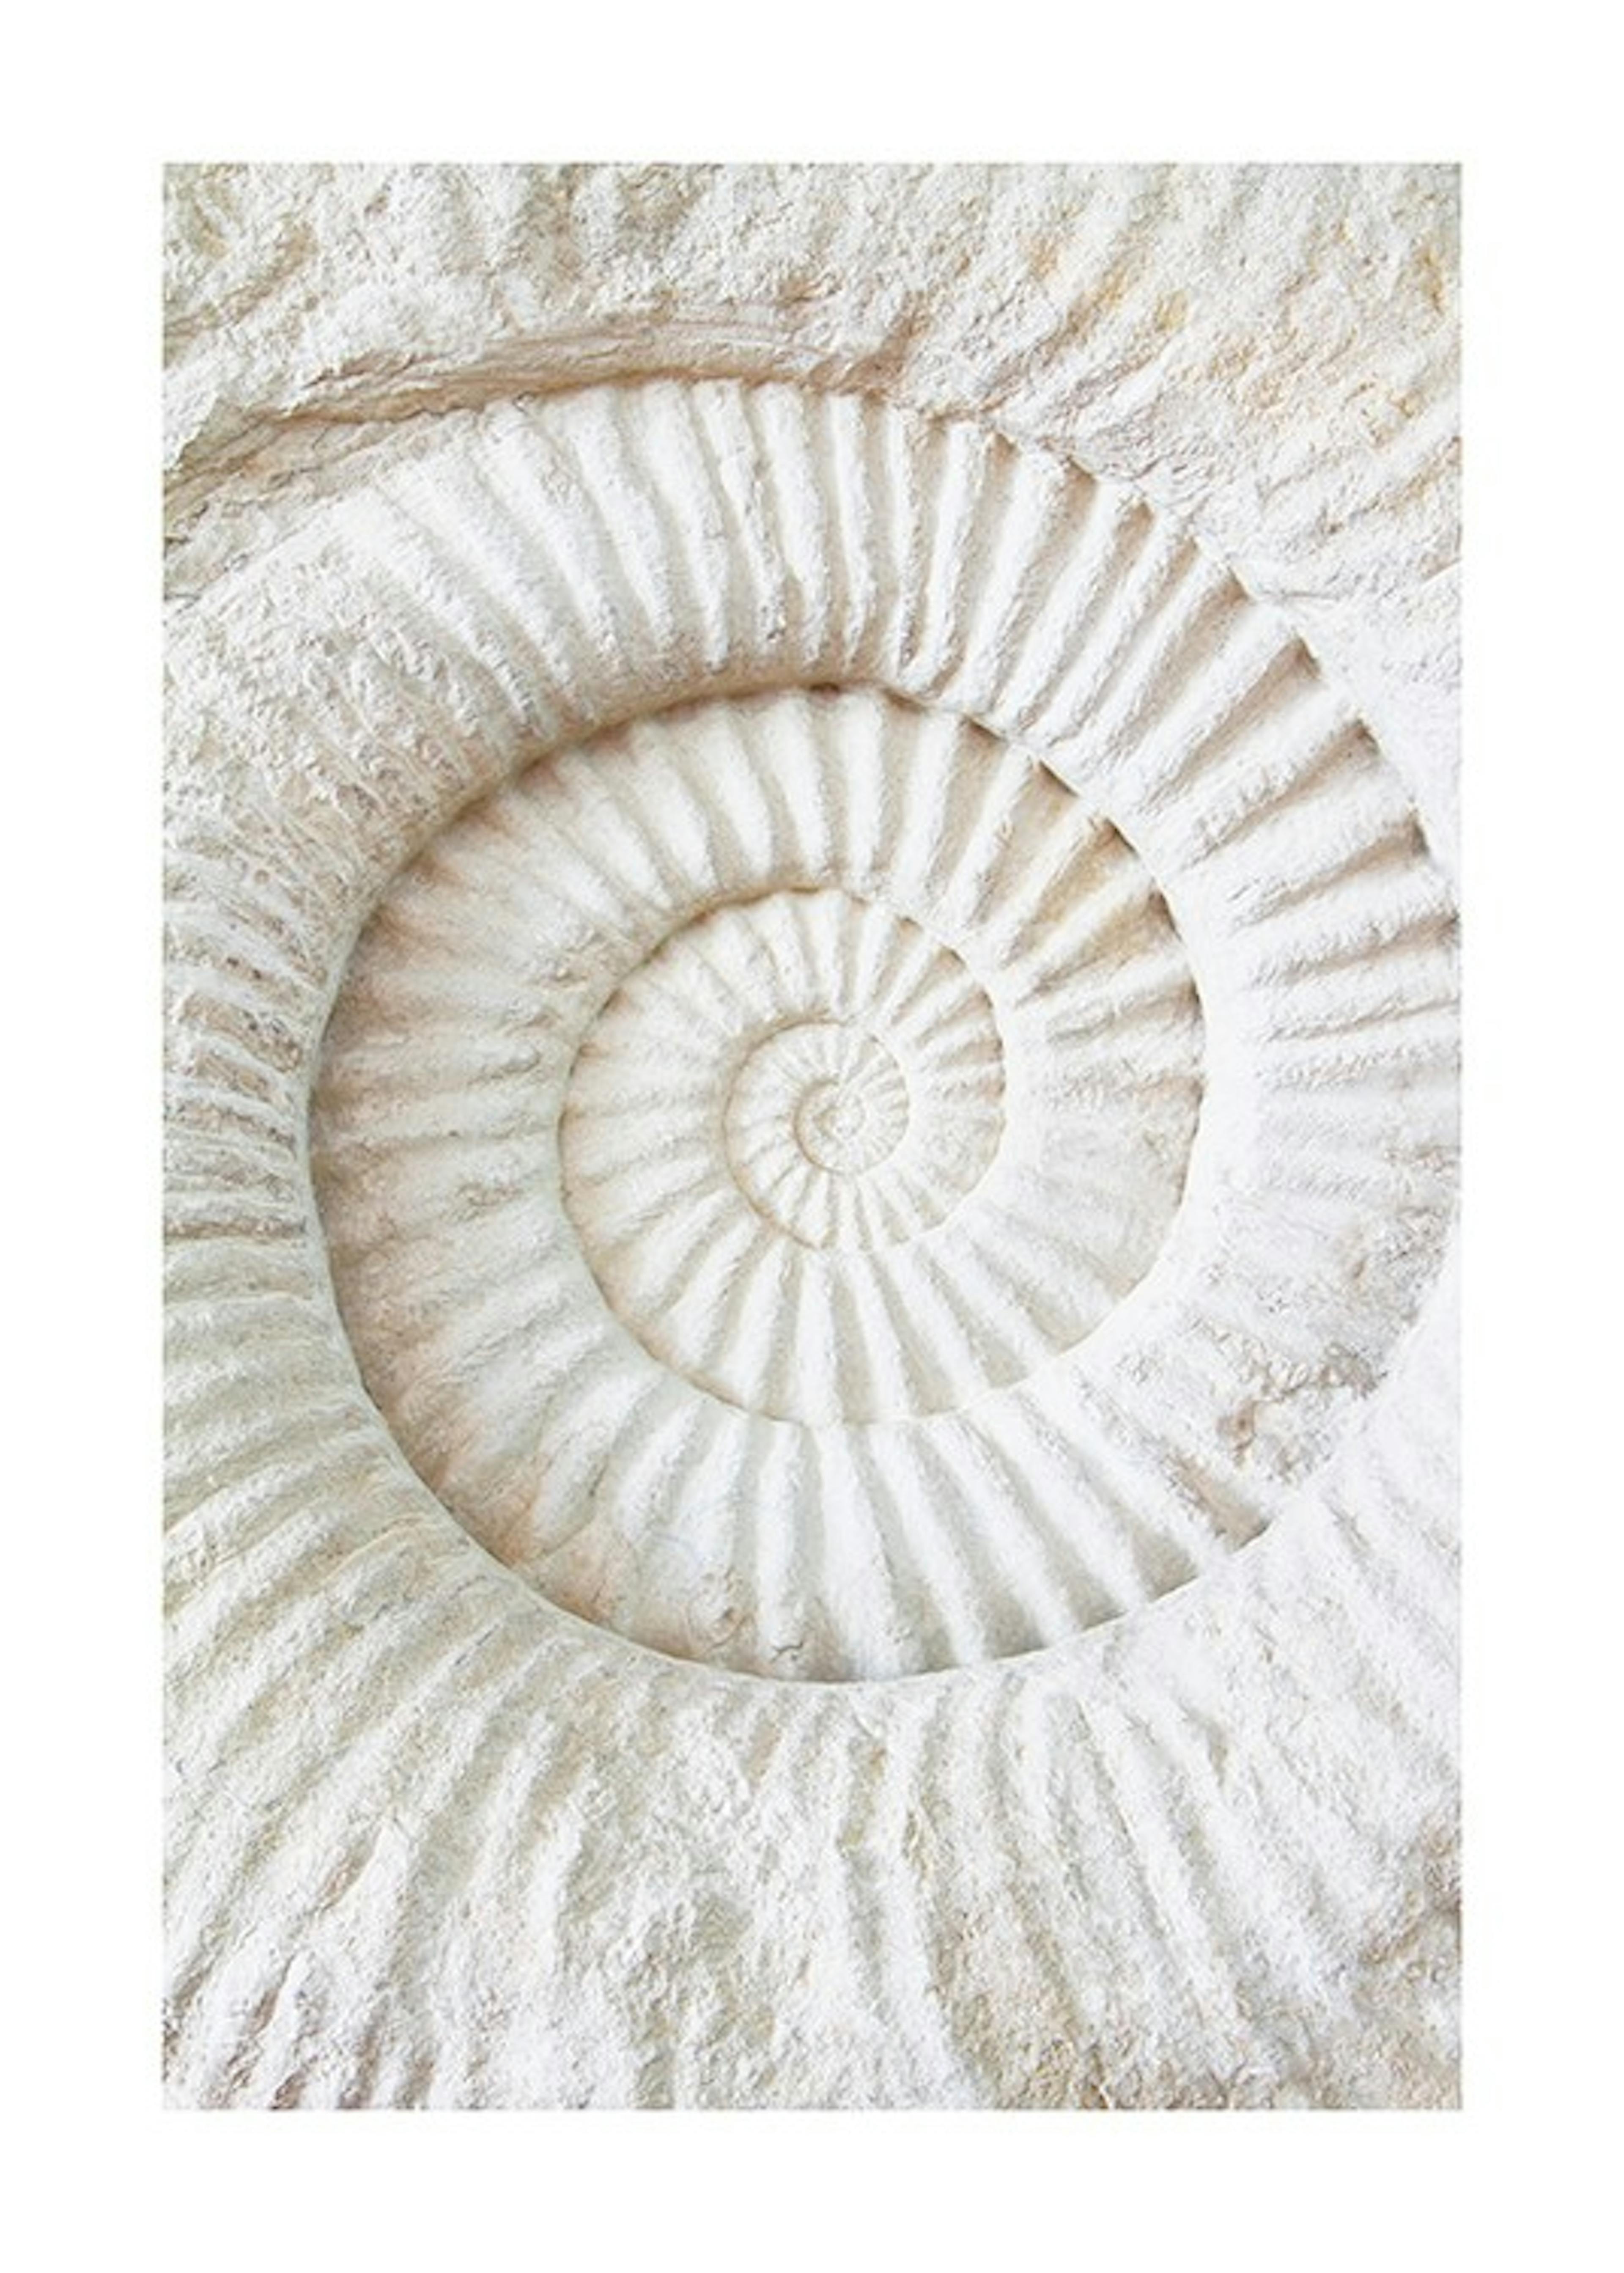 Ammonite Fossil Print 0